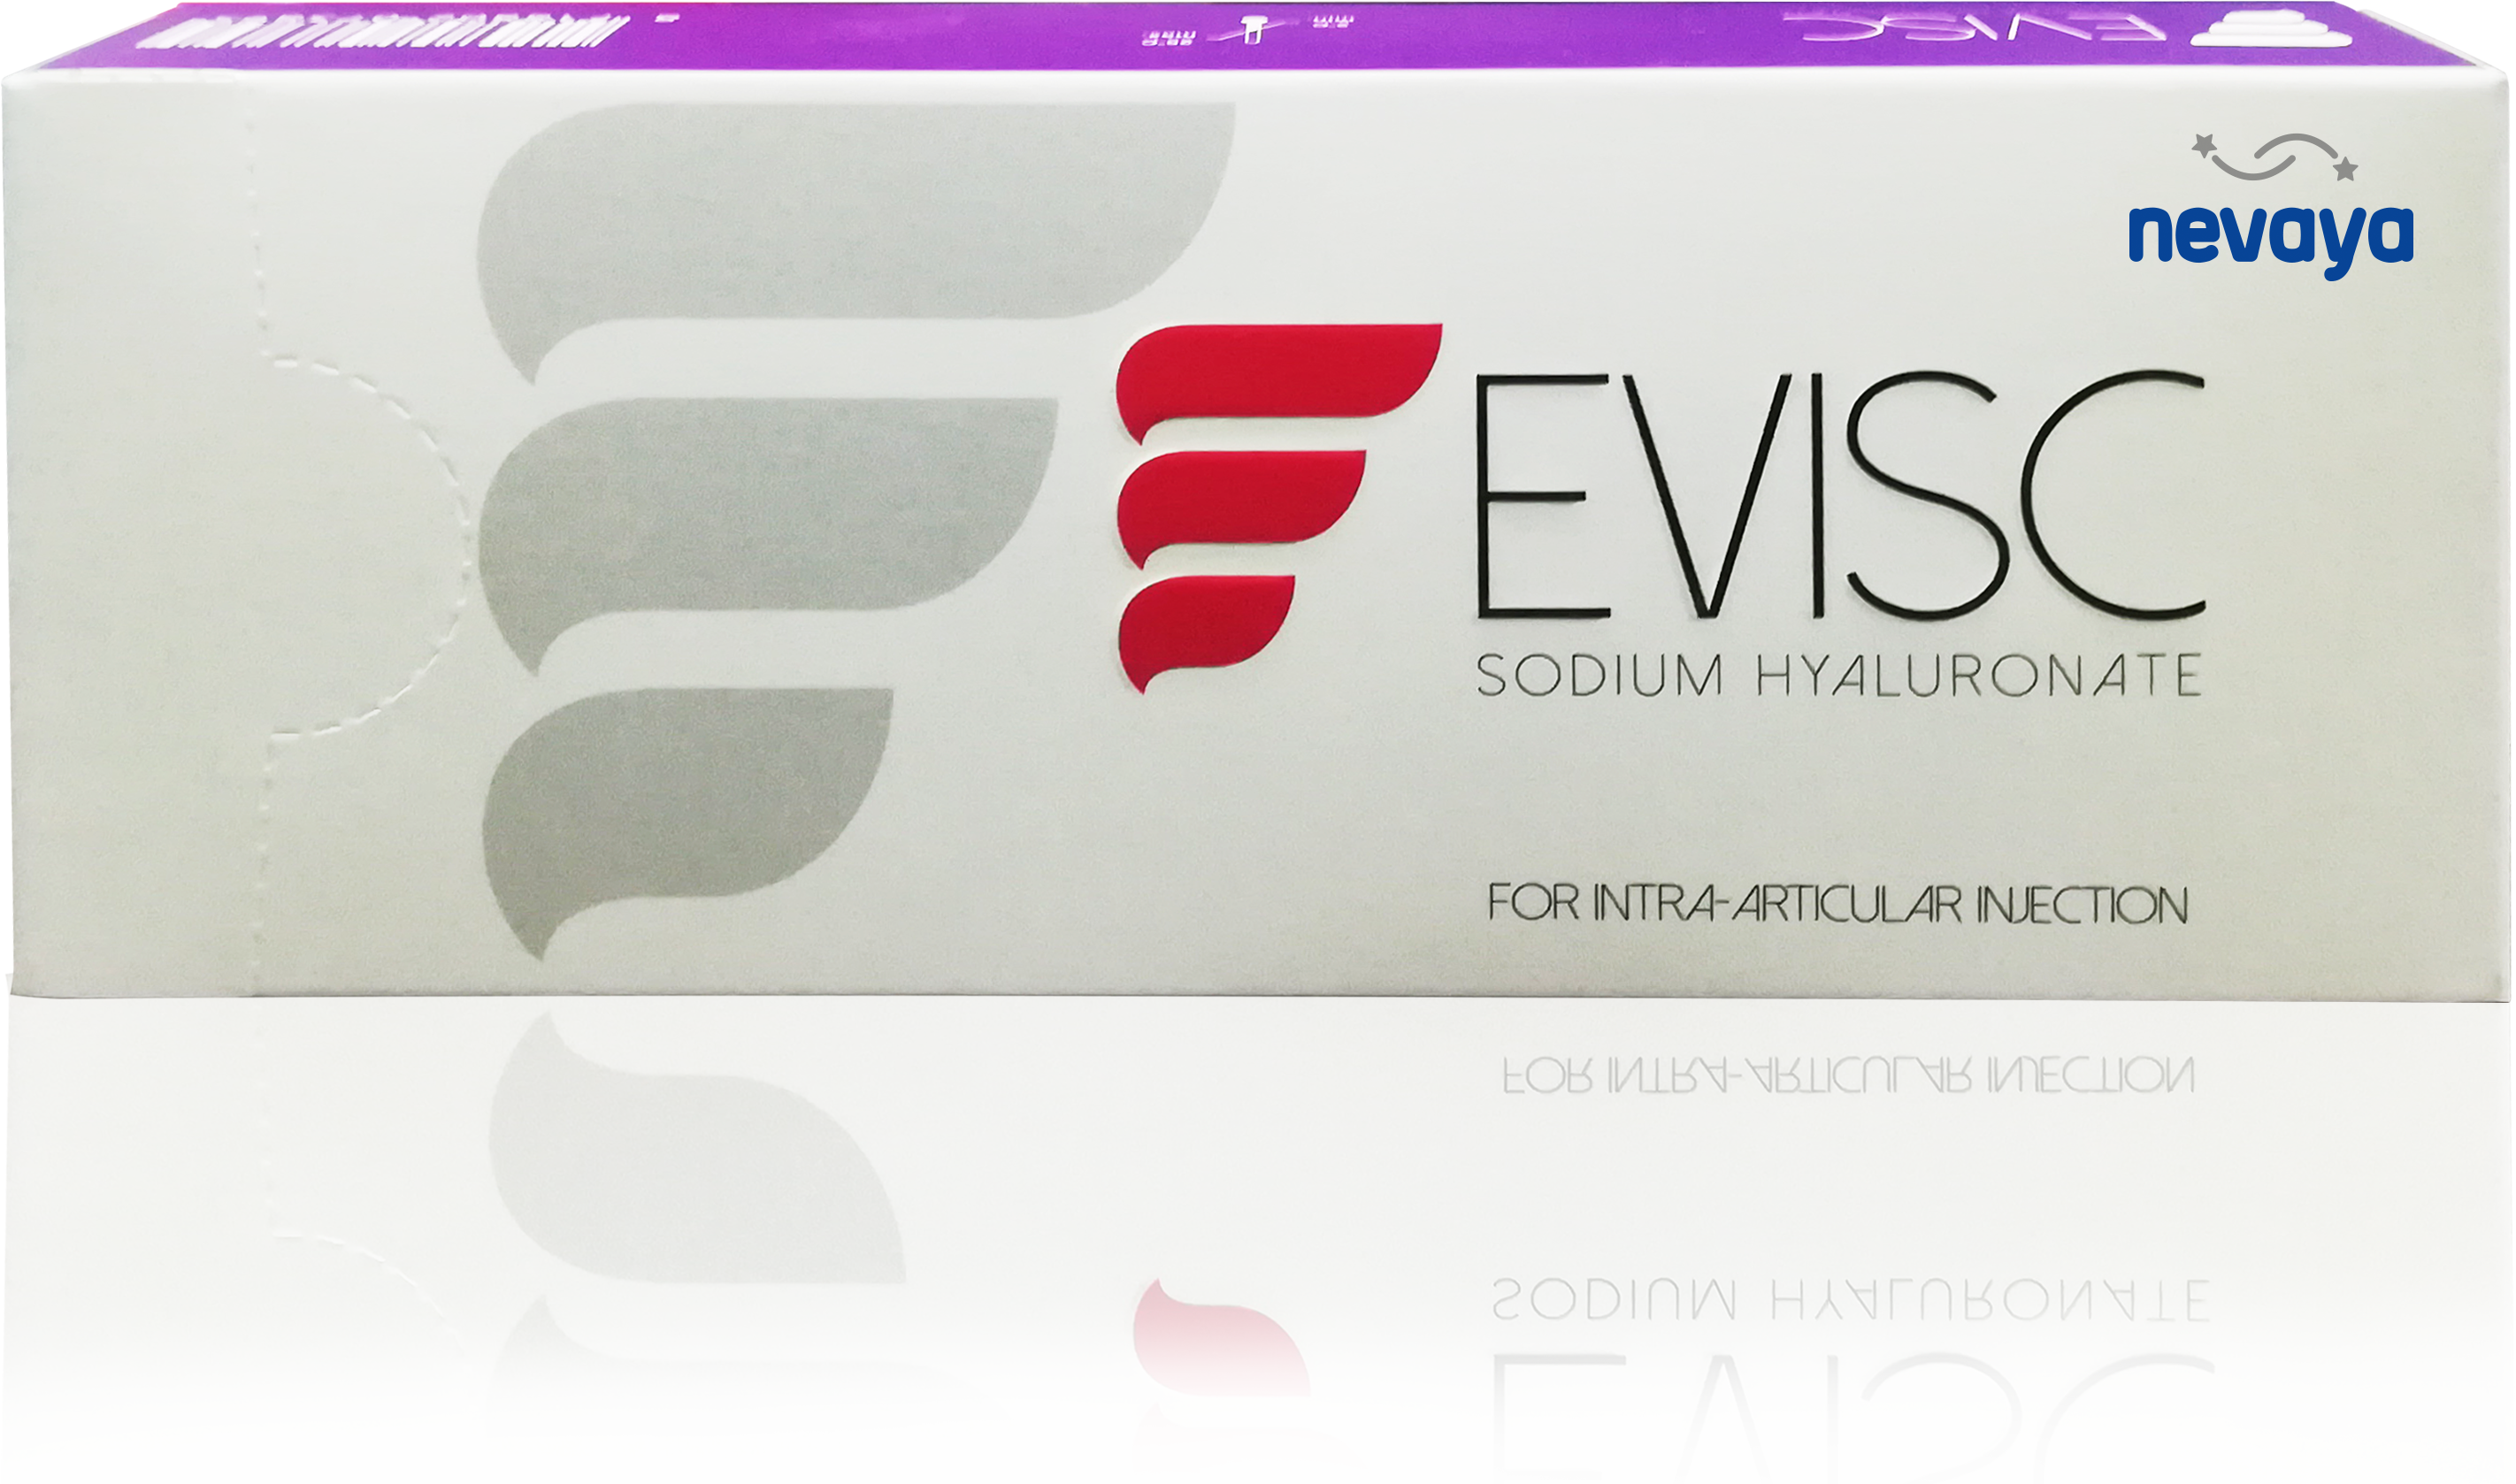 Evisc 20 mg